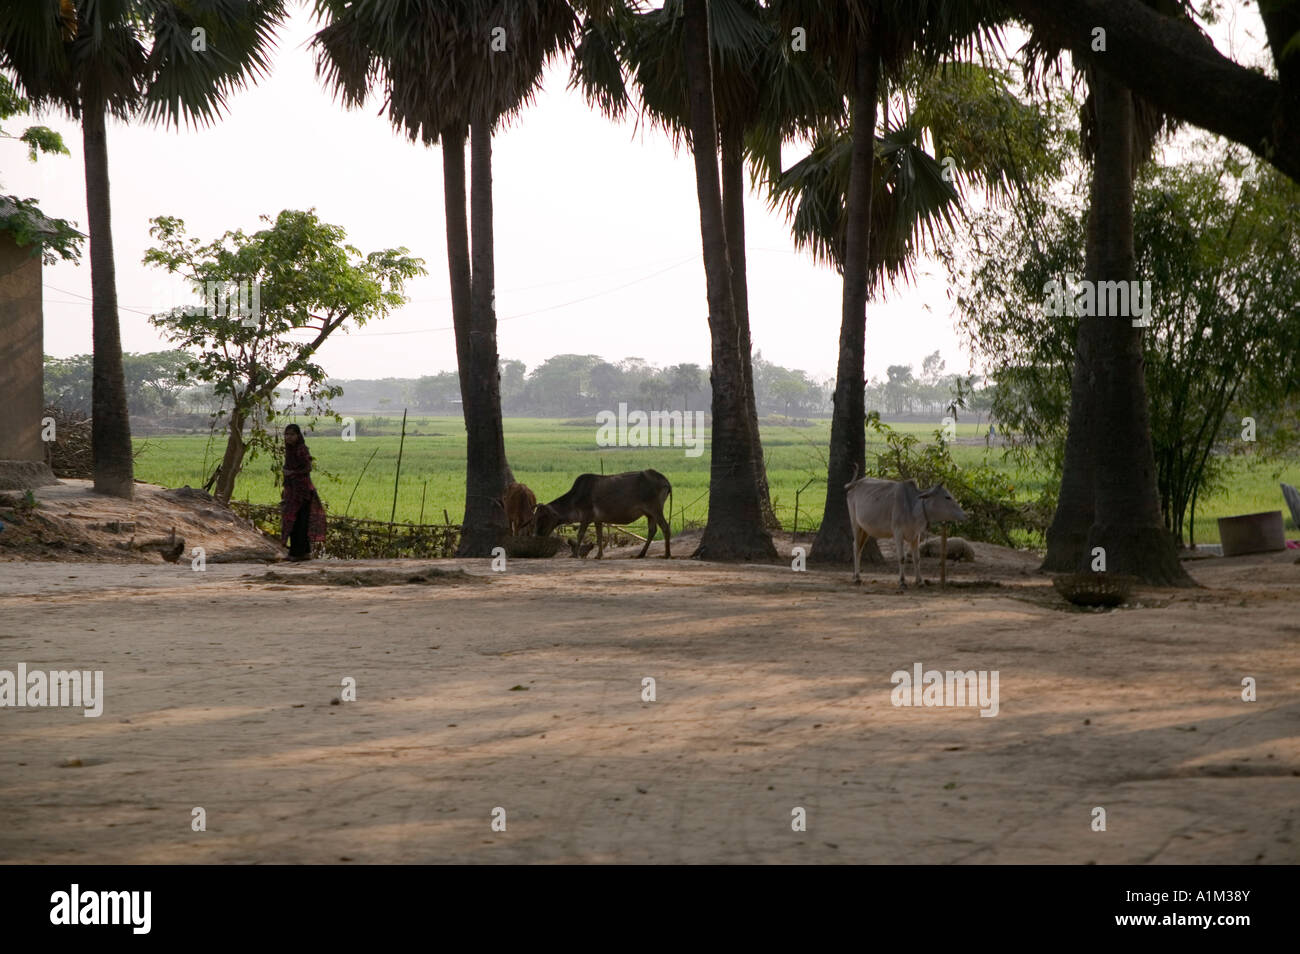 A landscape scene in rural Bangladesh Stock Photo